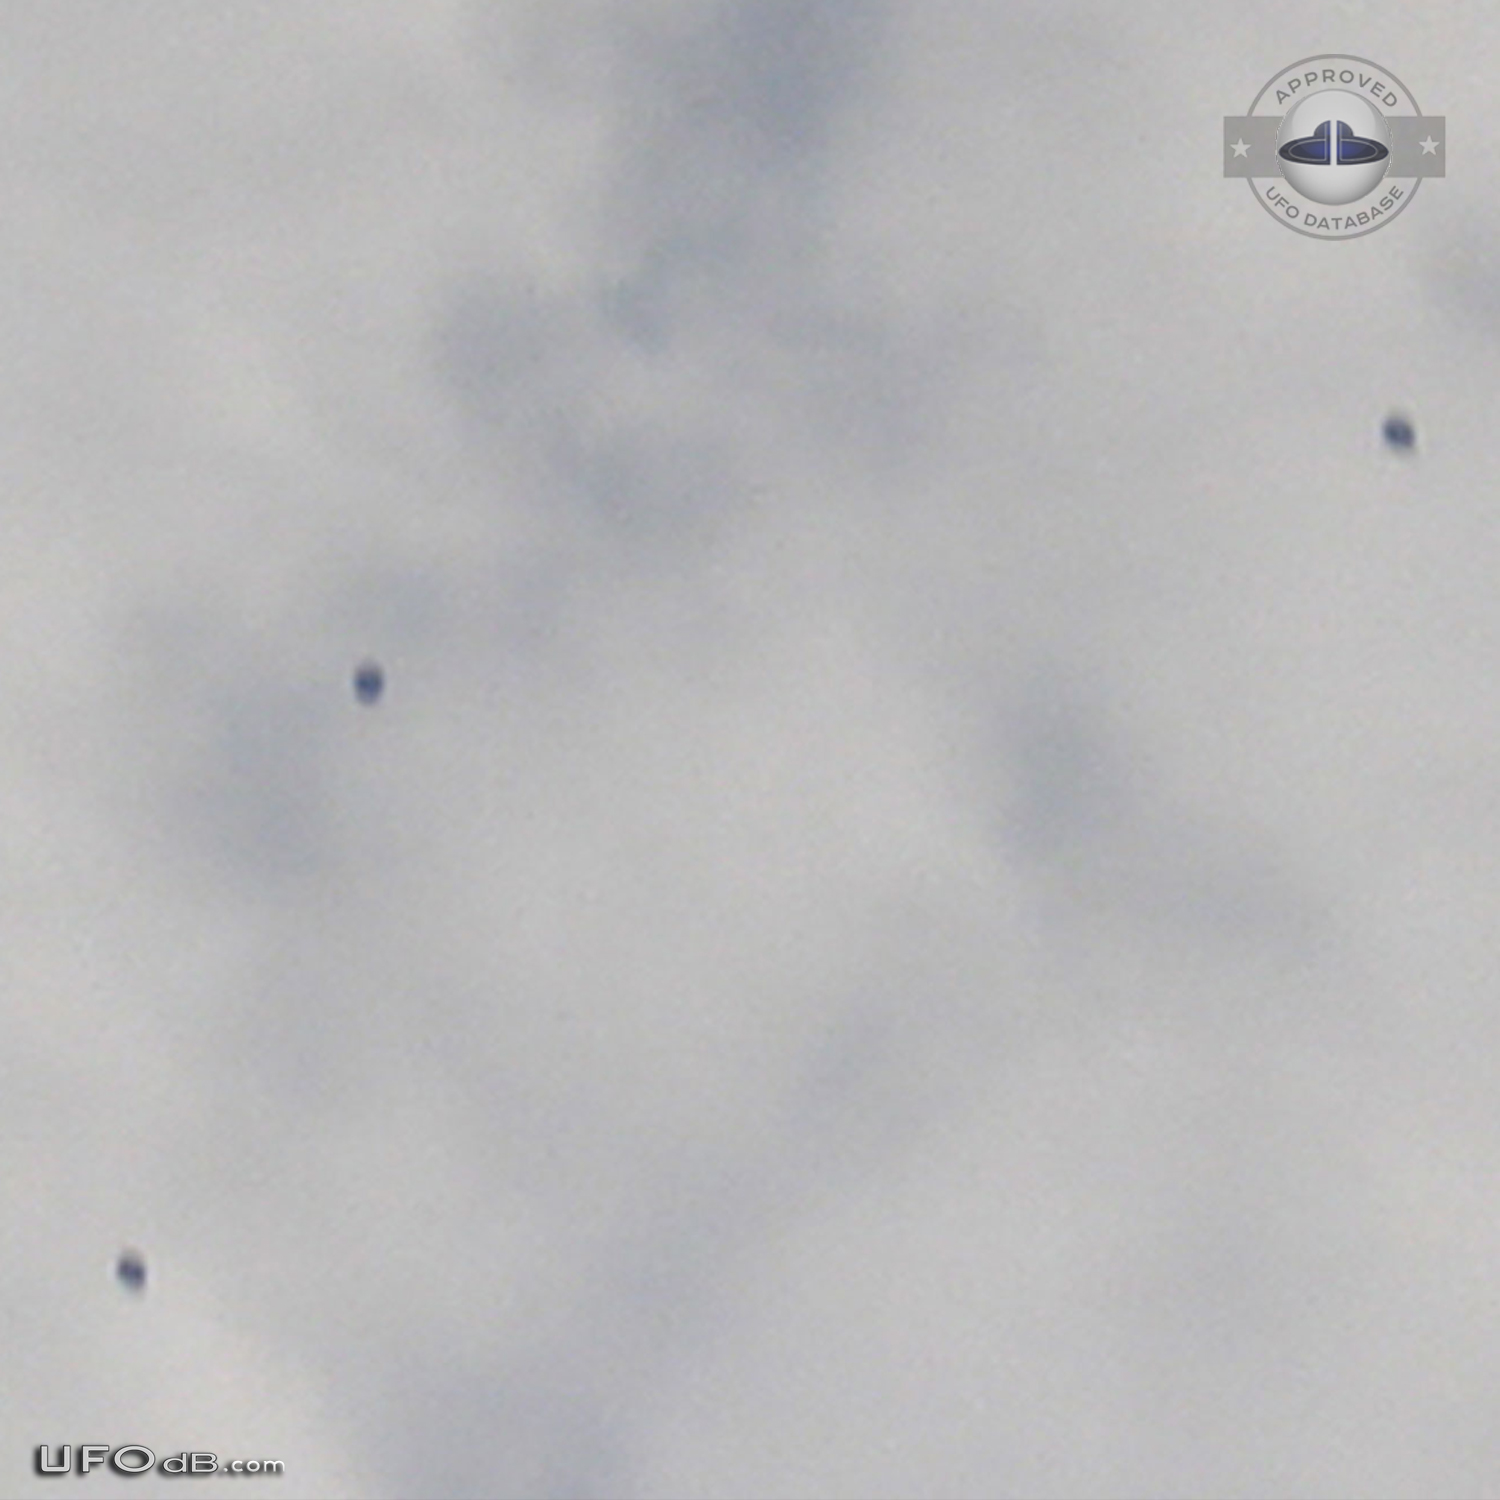 Four grey black disc UFOs near the airplane Mississauga, Ontario 2010 UFO Picture #531-2